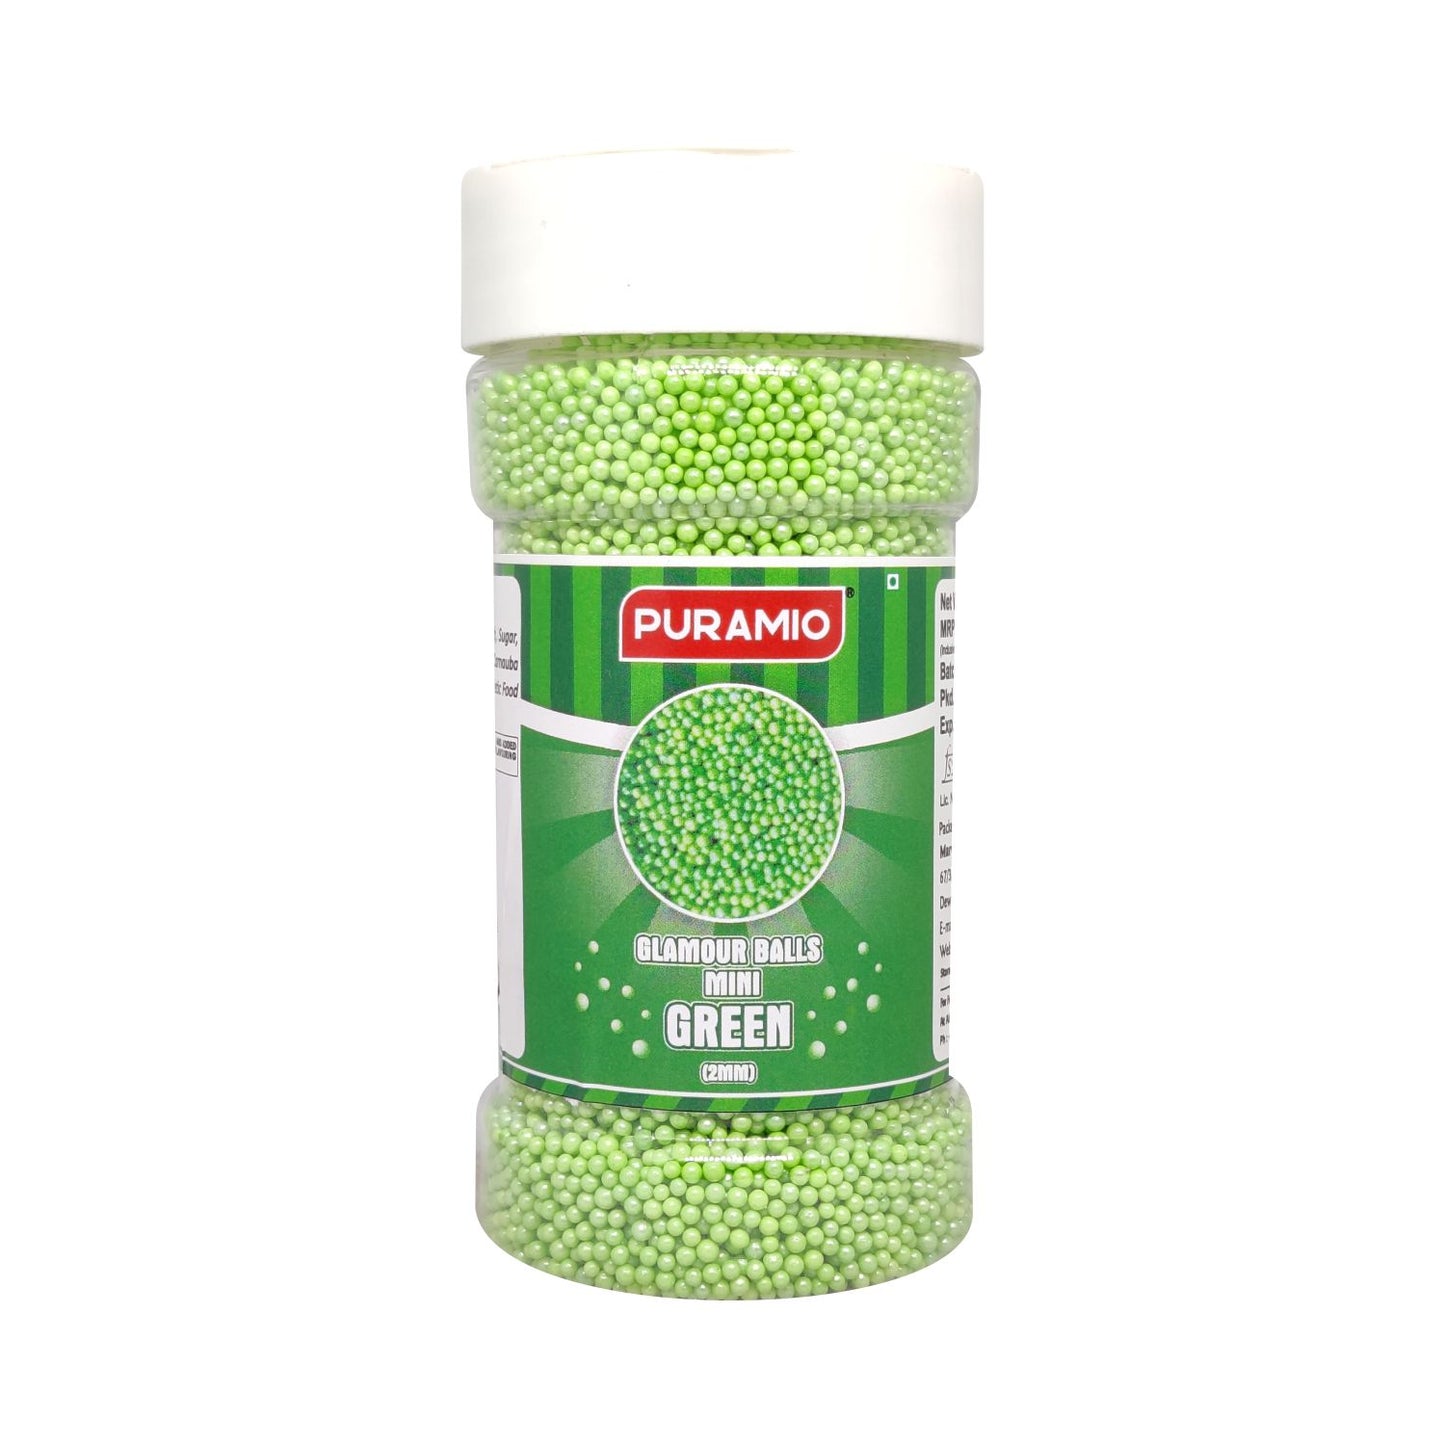 Puramio Glamour Balls Mini - Green (2mm) | for Cake Decoration, 150g